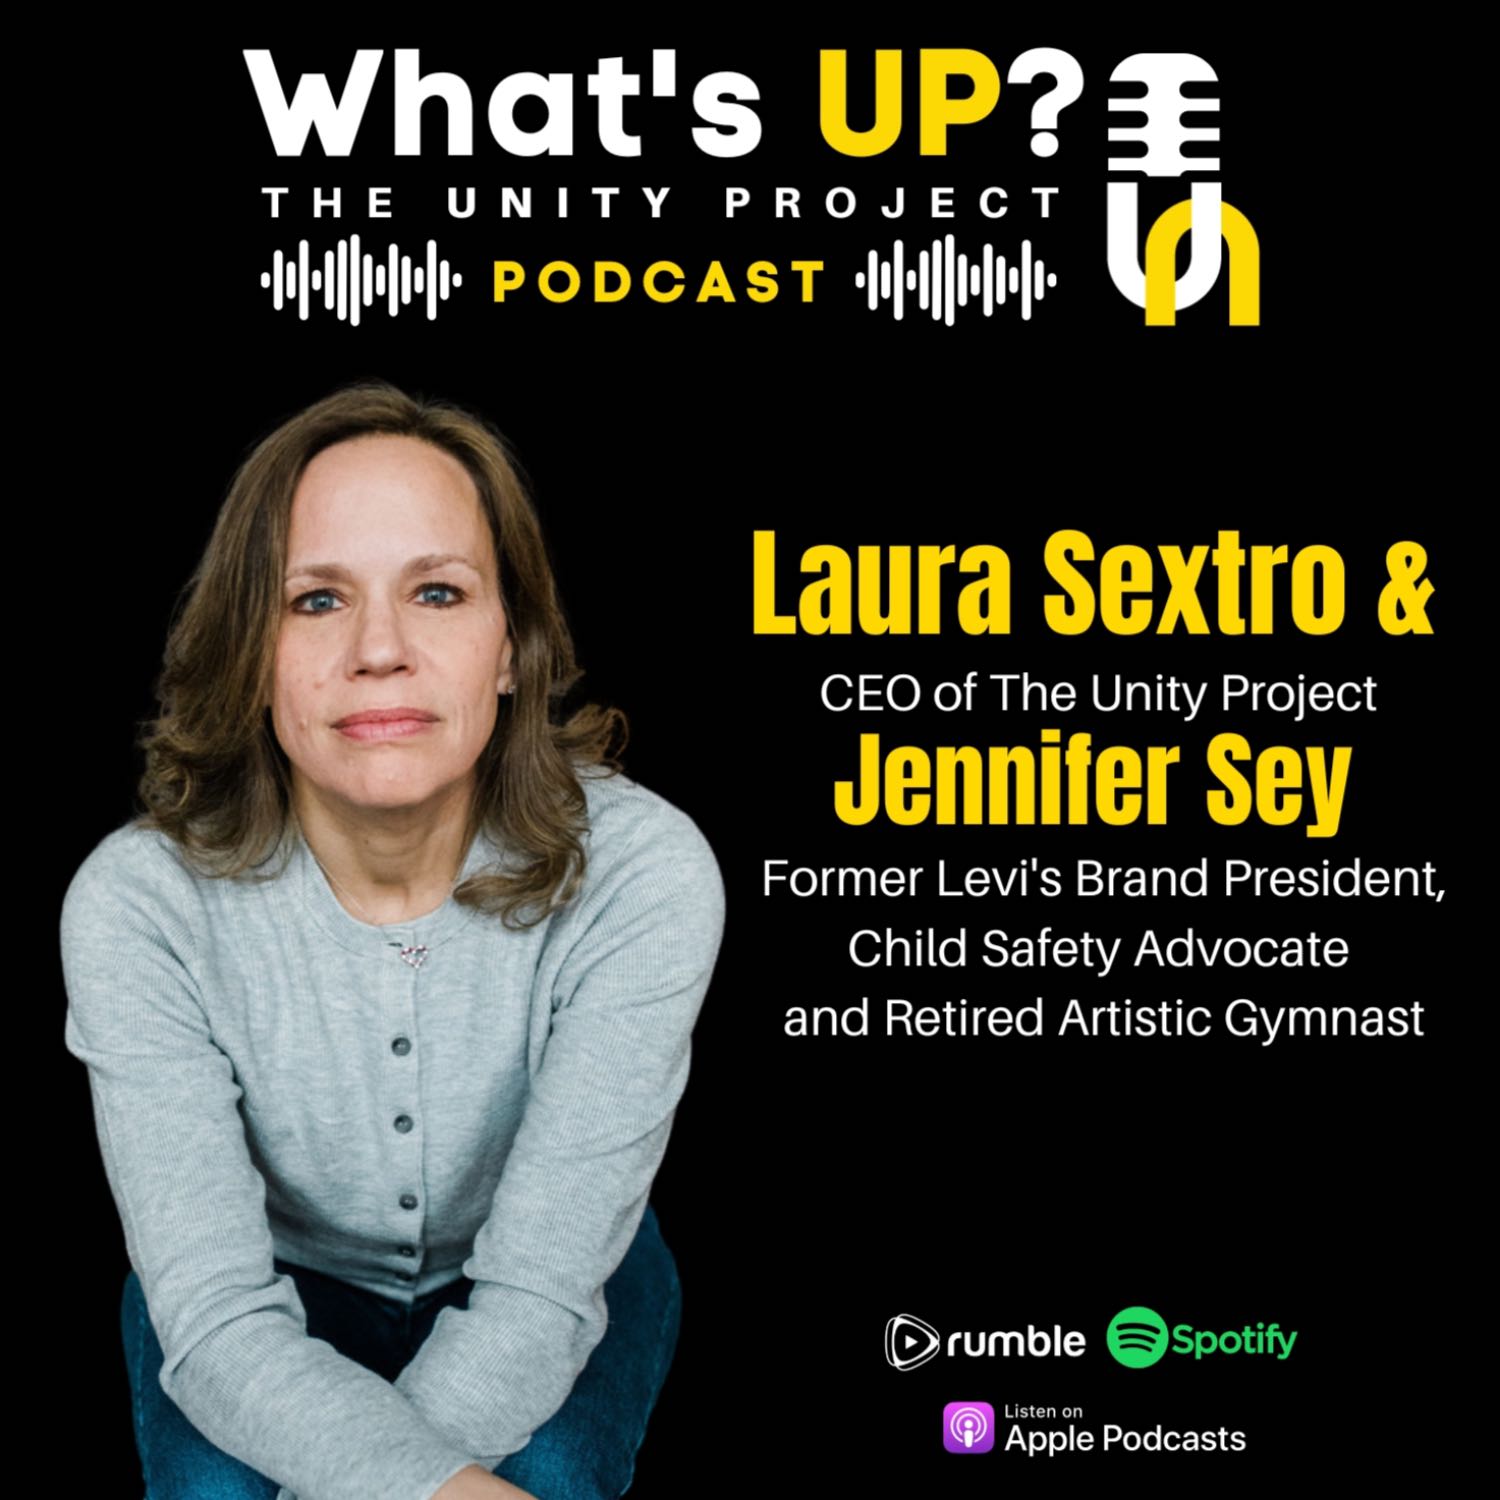 The Unity Project Podcast with former Levi’s Brand President Jennifer Sey